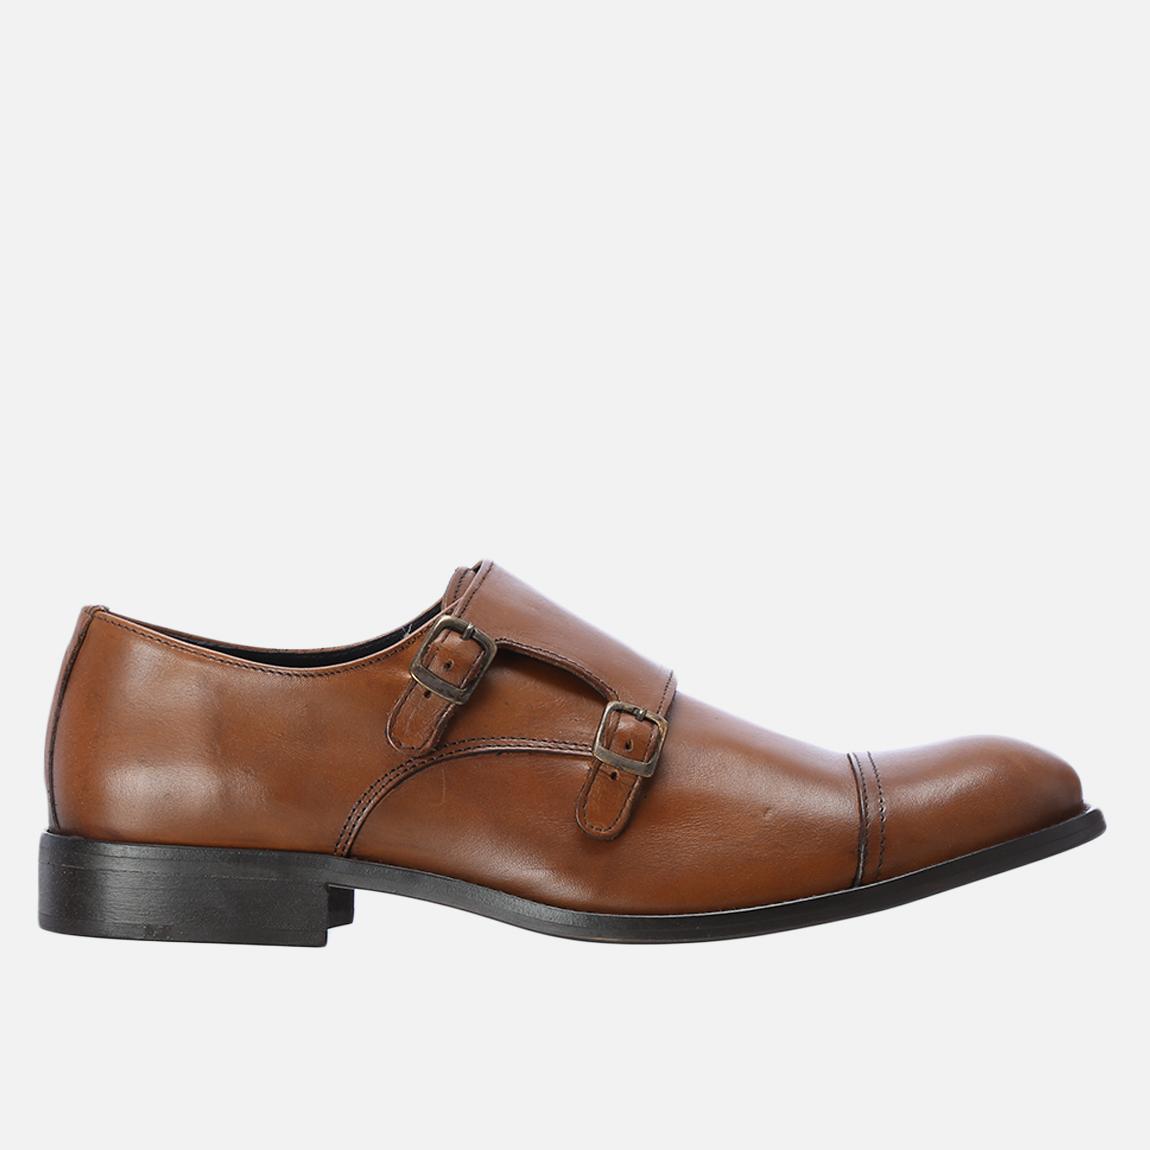 Monk Selected Homme Formal Shoes | Superbalist.com